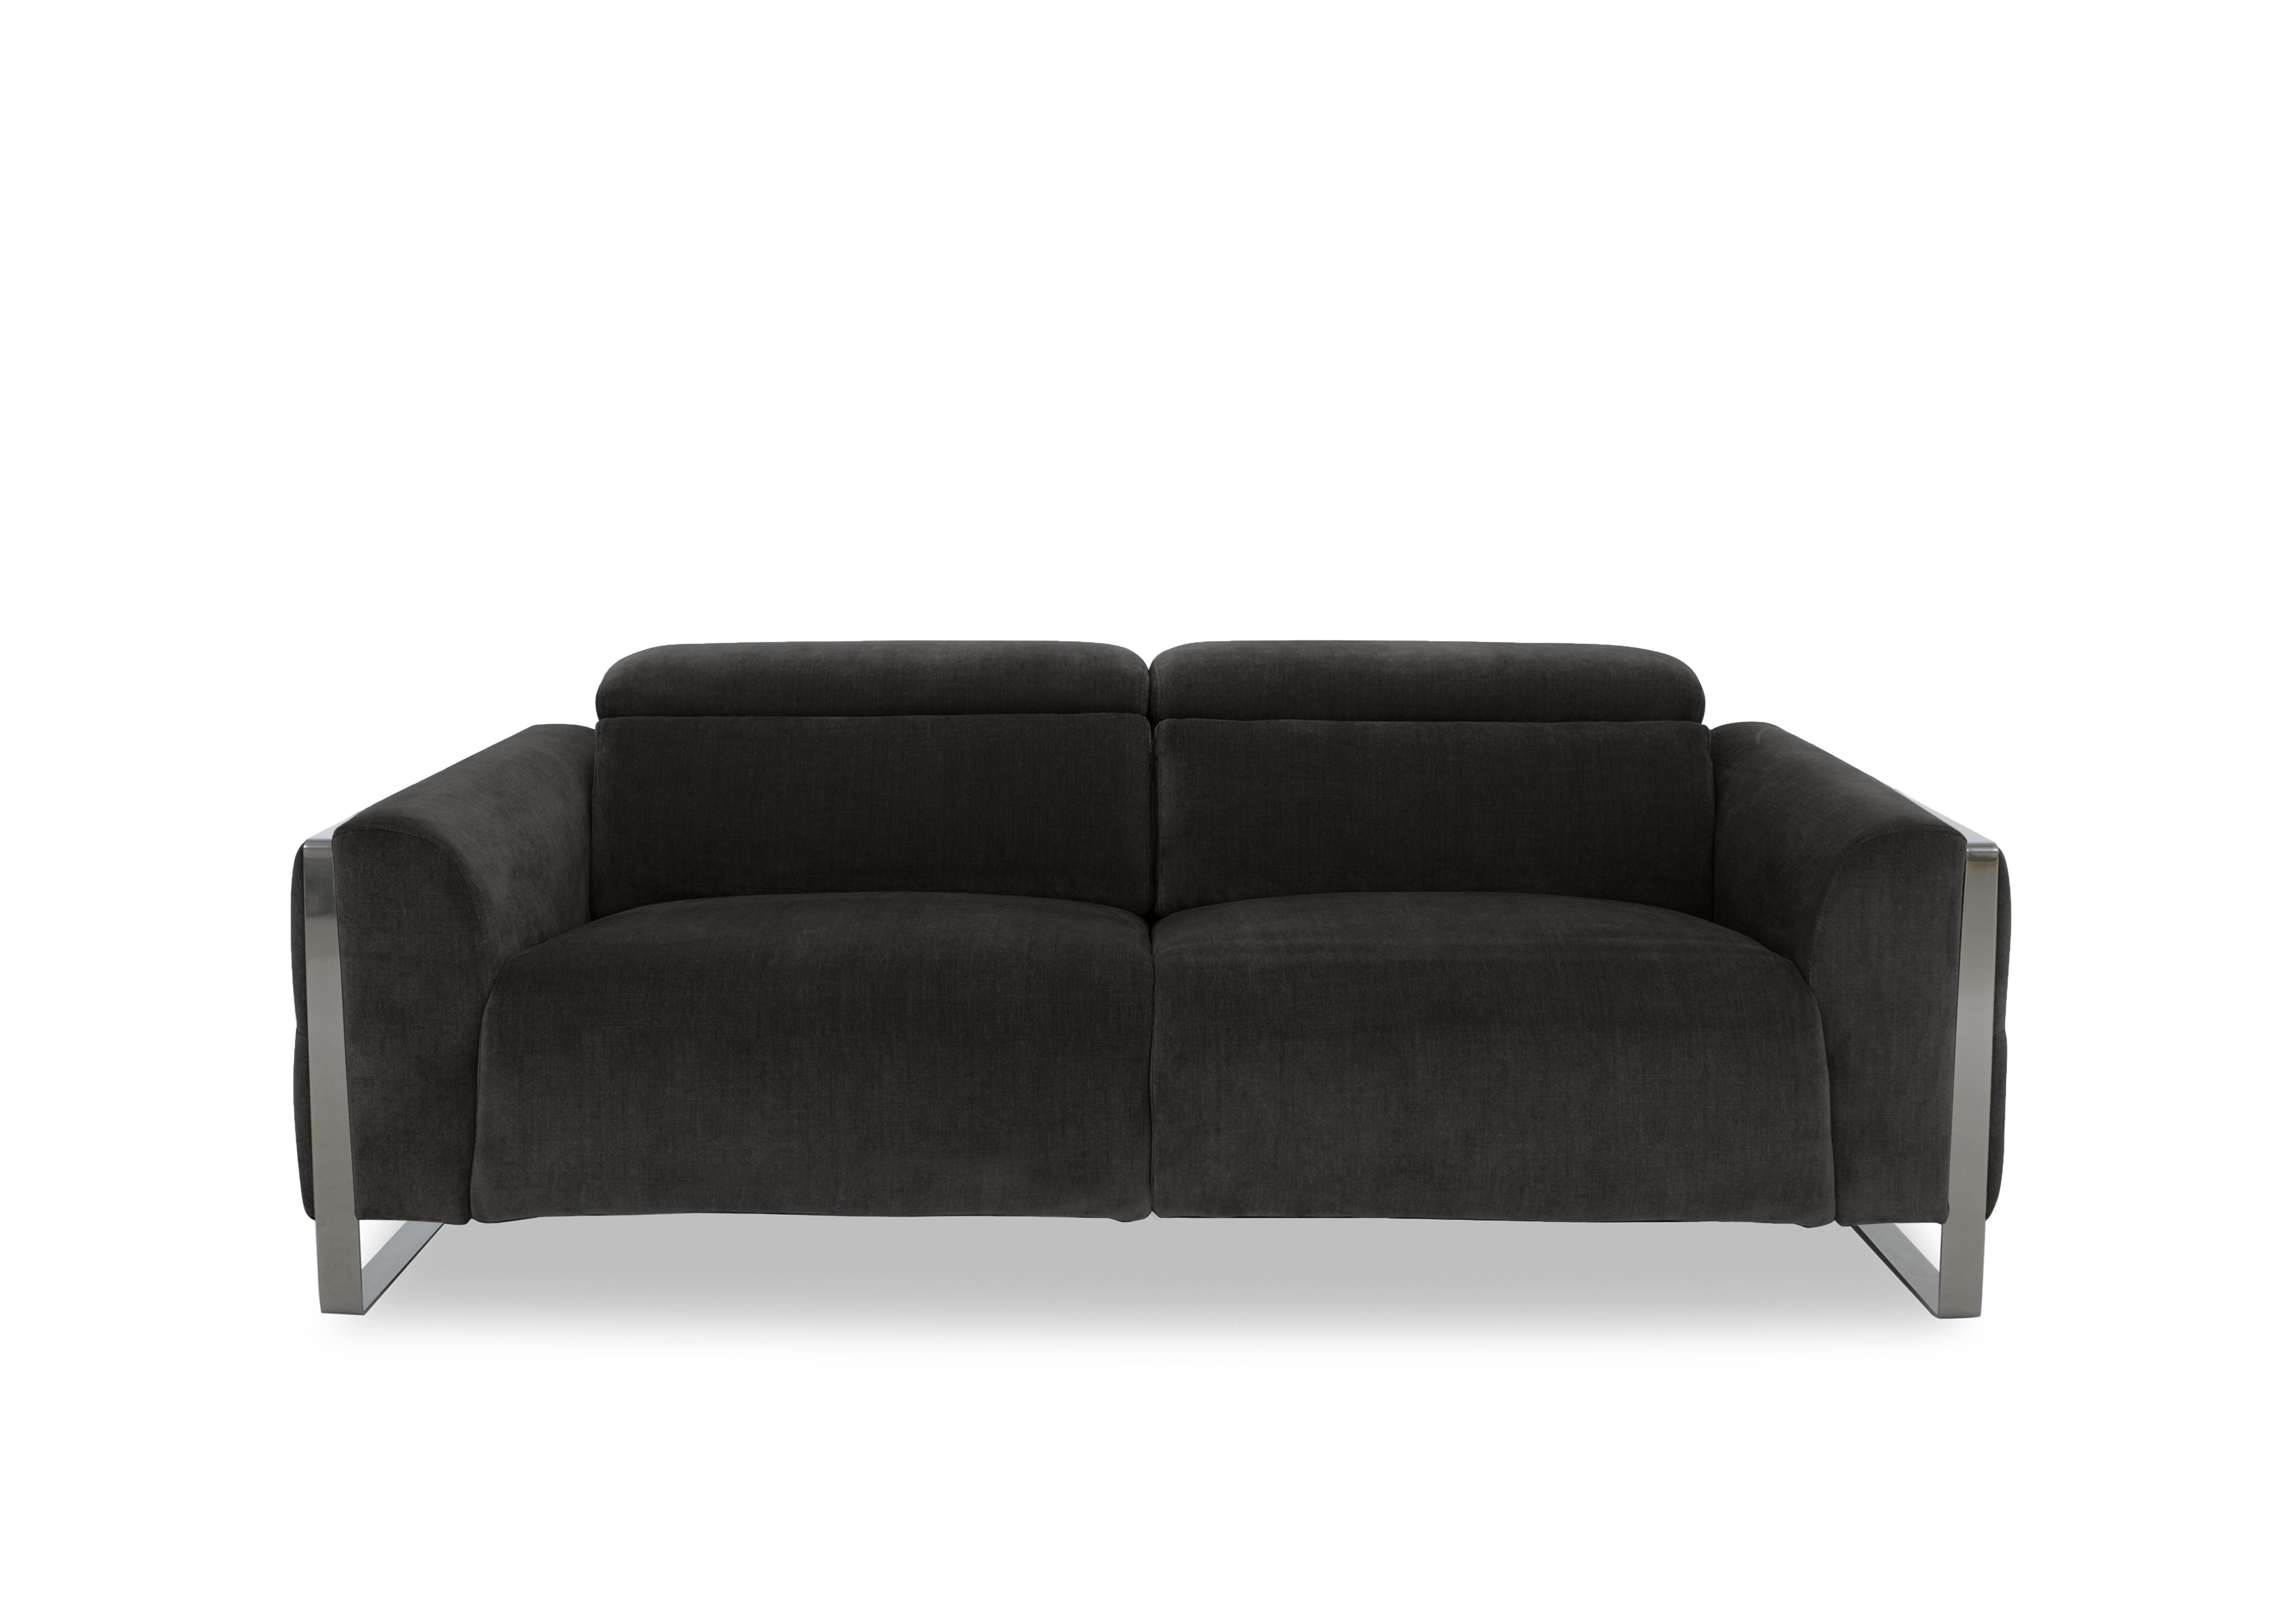 Gisella Fabric 3 Seater Sofa in Manhattan Indigo 58009 on Furniture Village